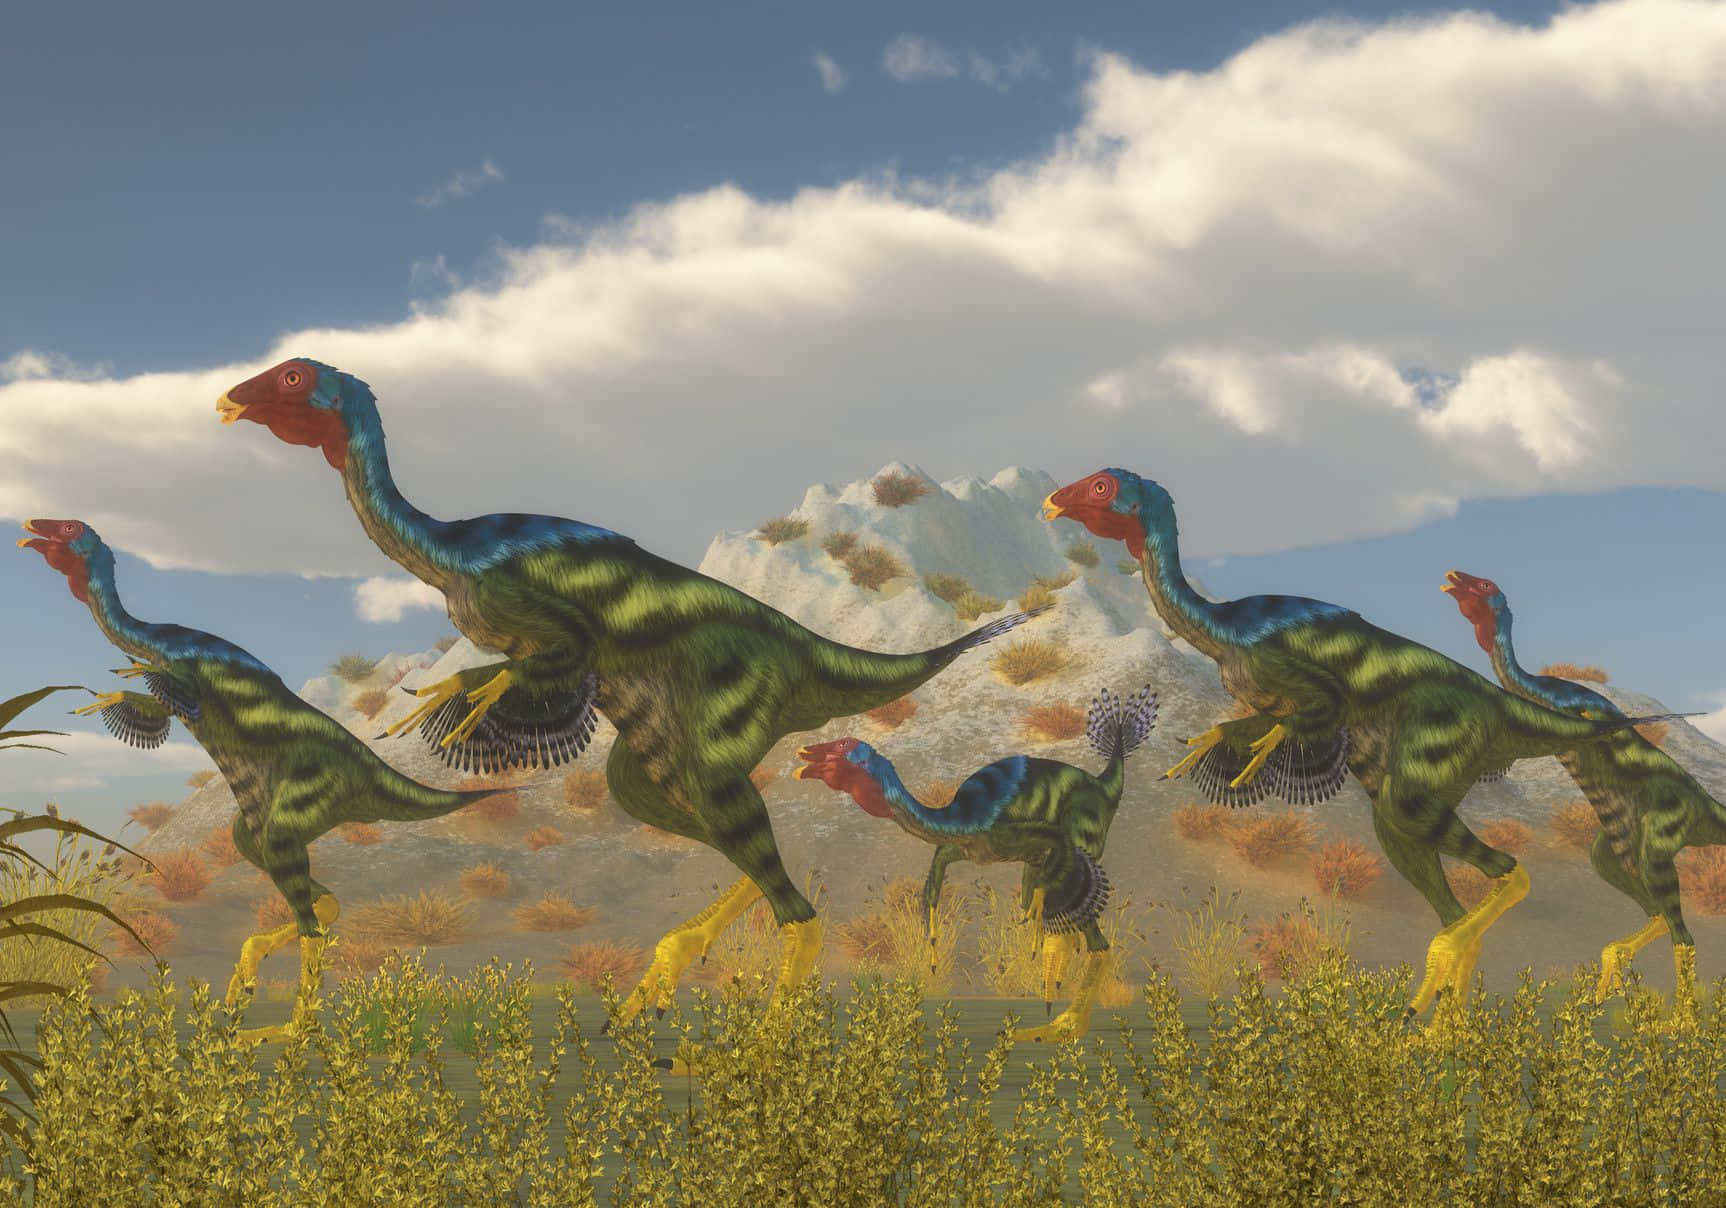 Undinosaurio Stegosaurus Caminando En Su Hábitat Natural.